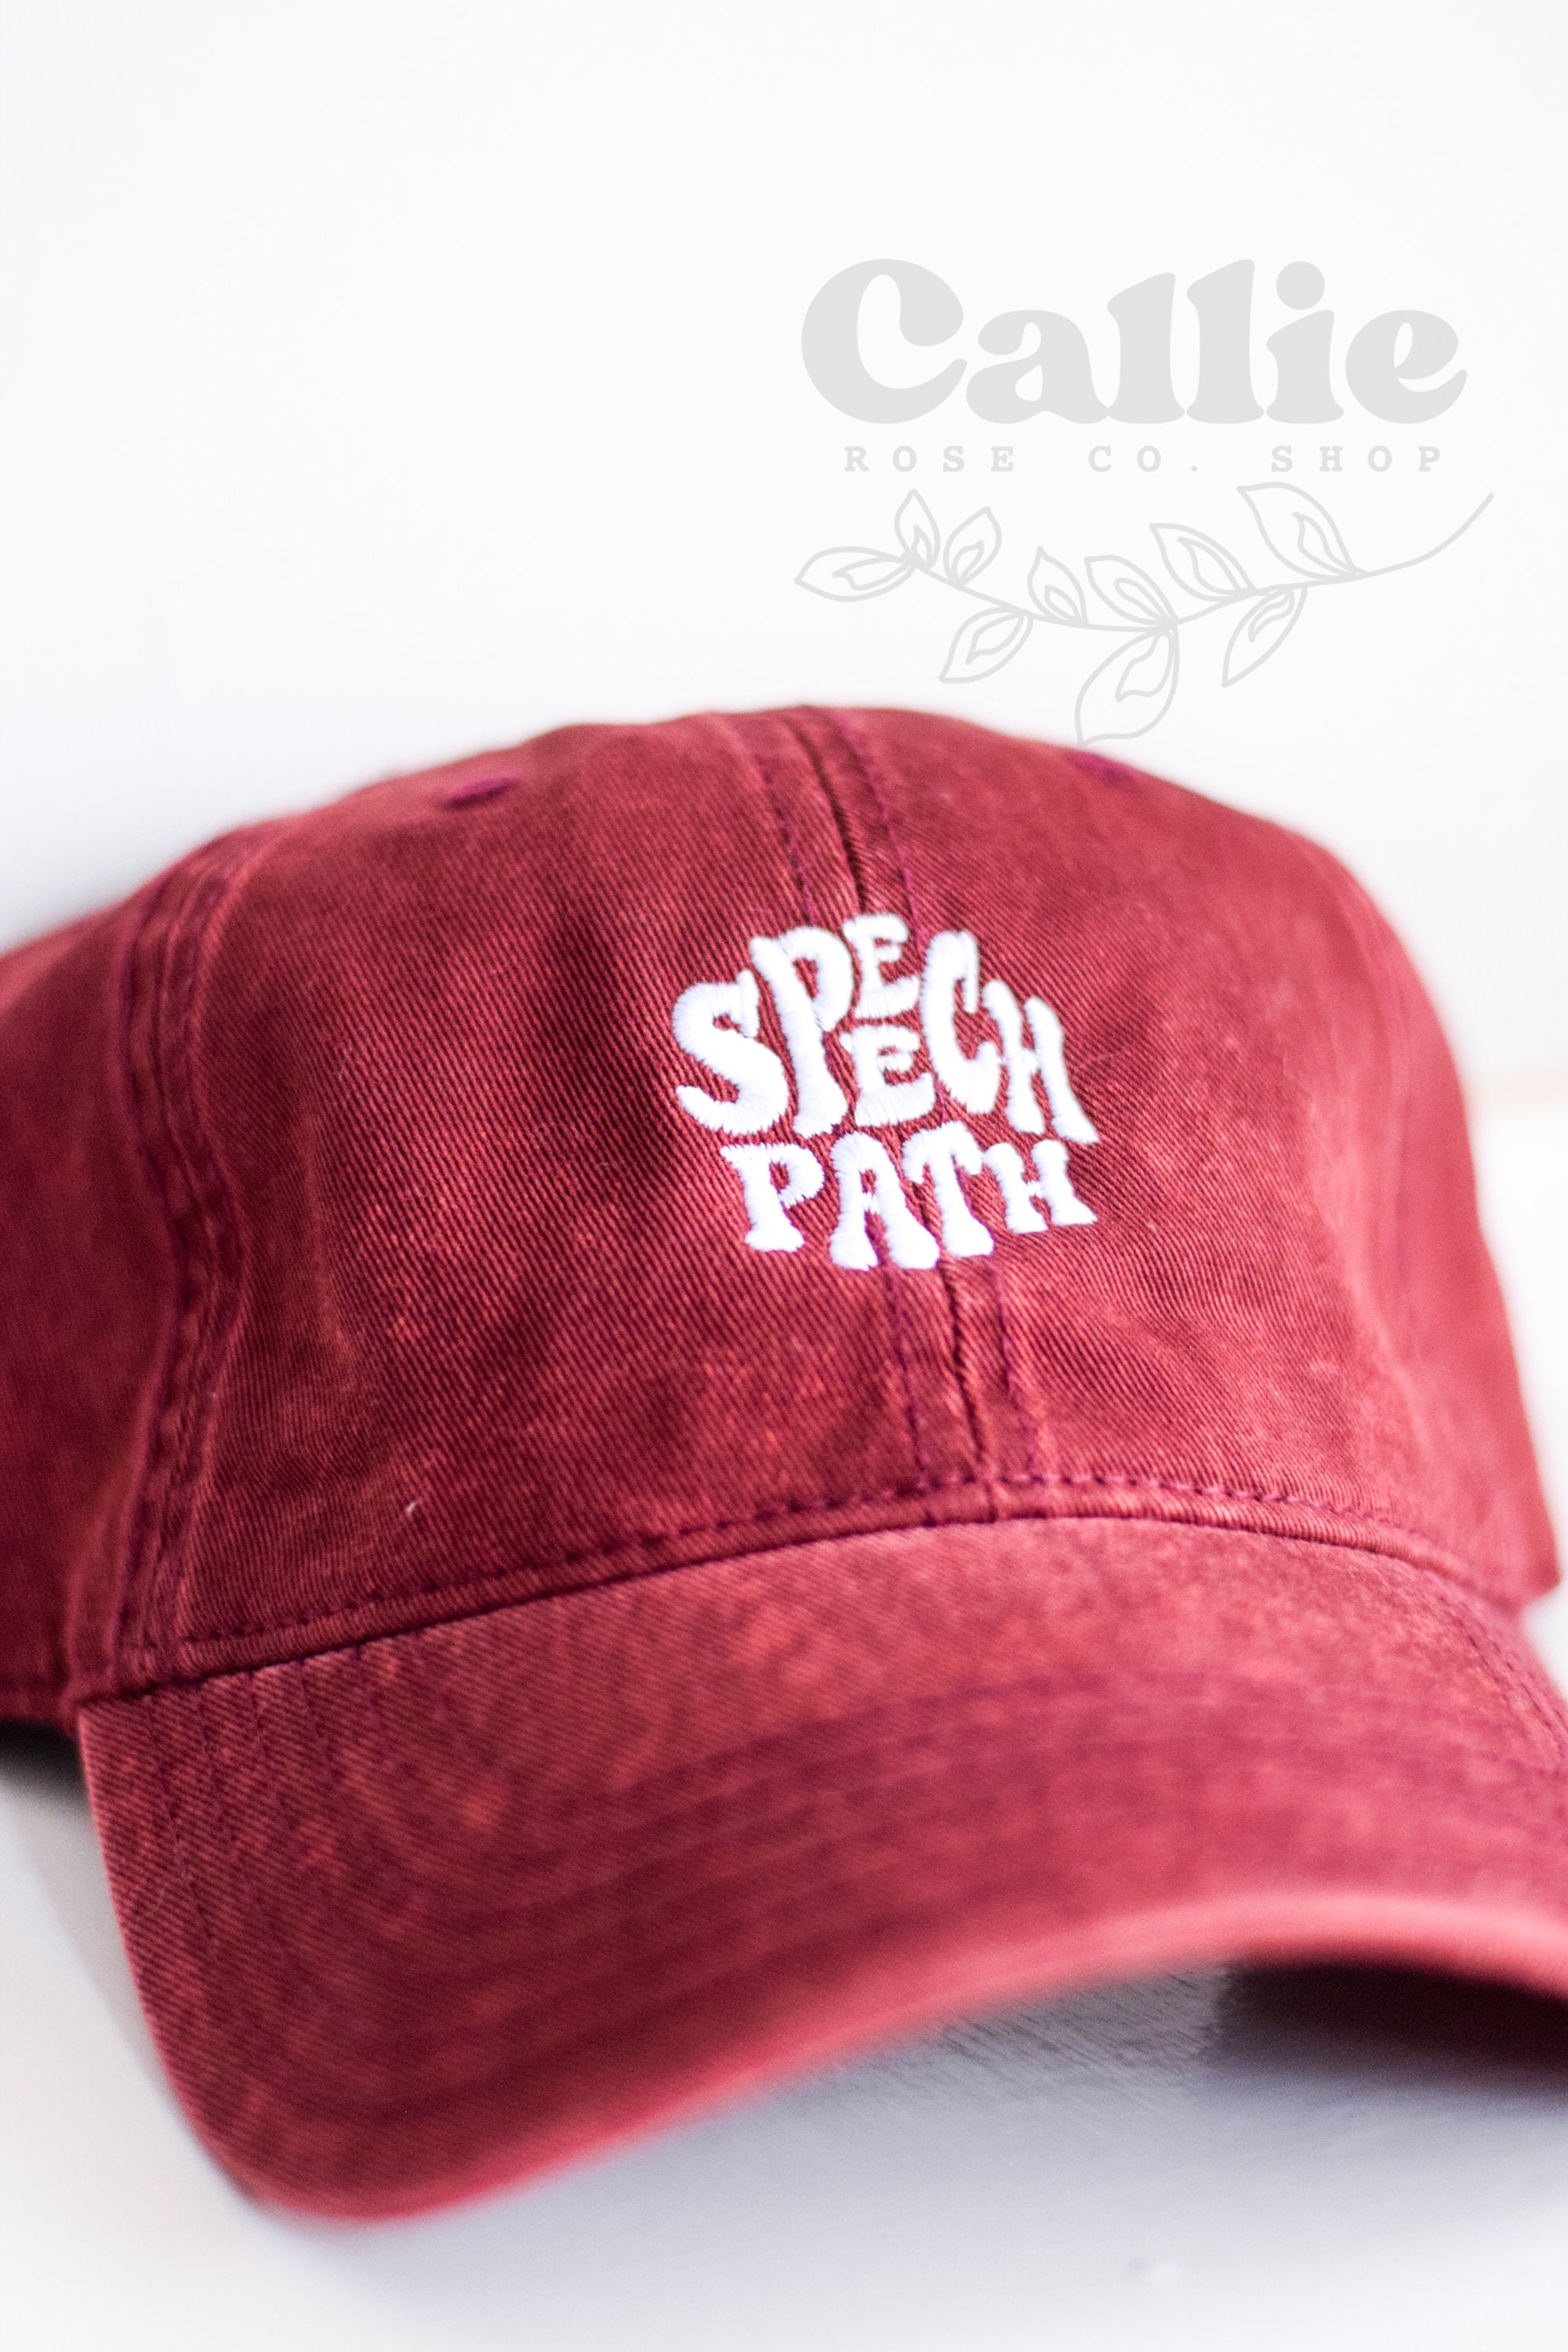 Speech Path Retro Inspired Embroidered Vintage Cotton Twill Cap | SLP Hat Baseball Cap, Gift for Speech Language Pathologists